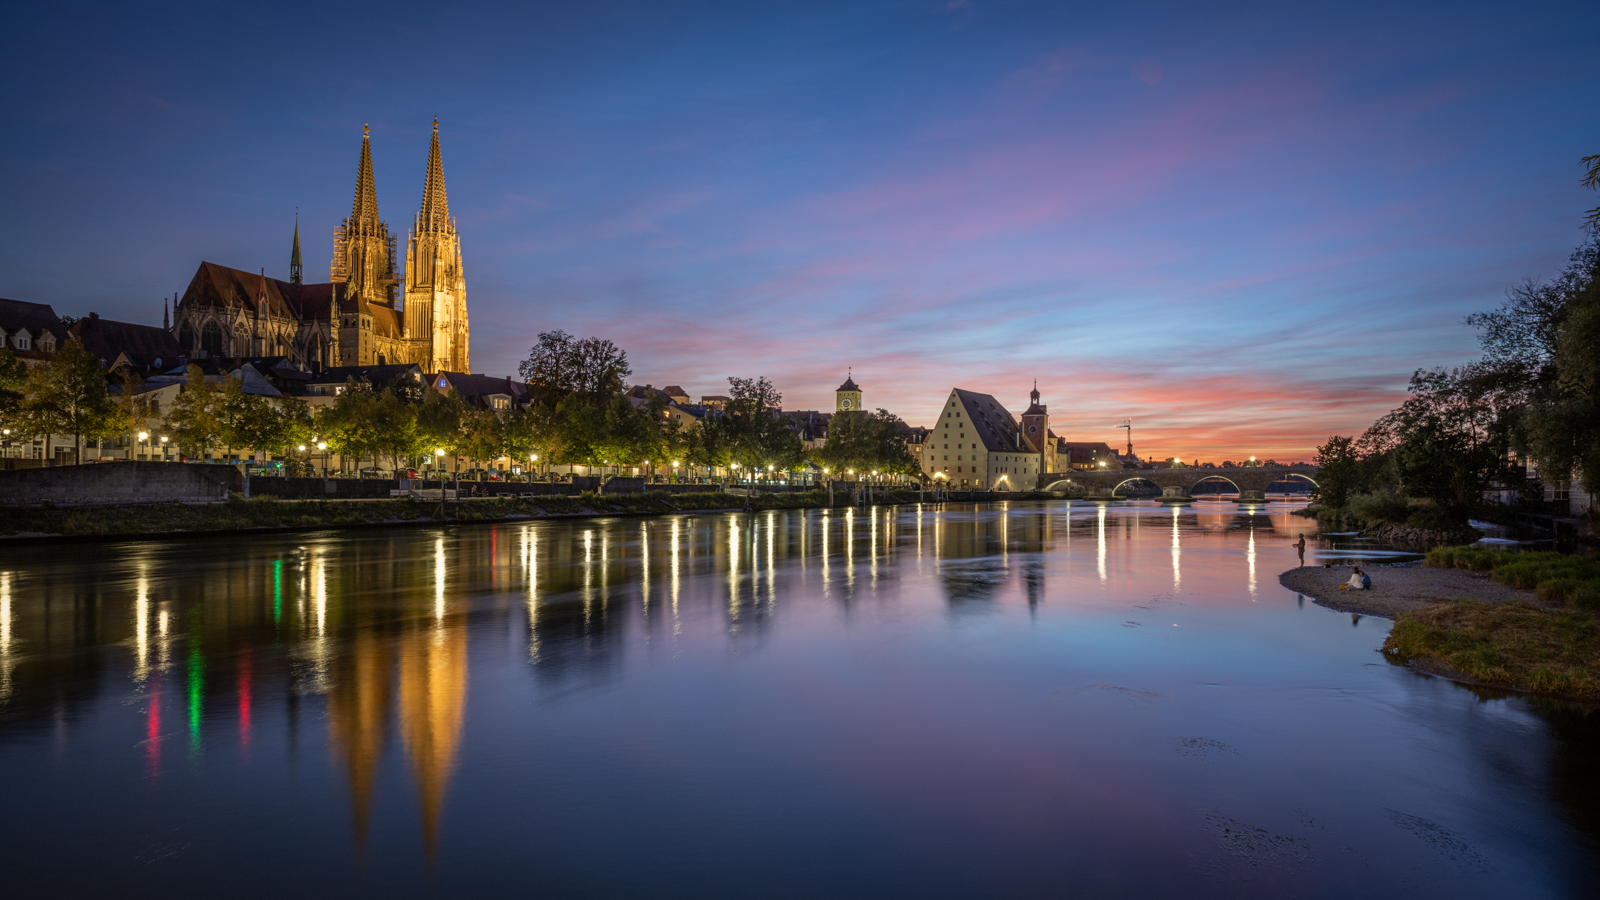 Regensburg bei Sonnenuntergang